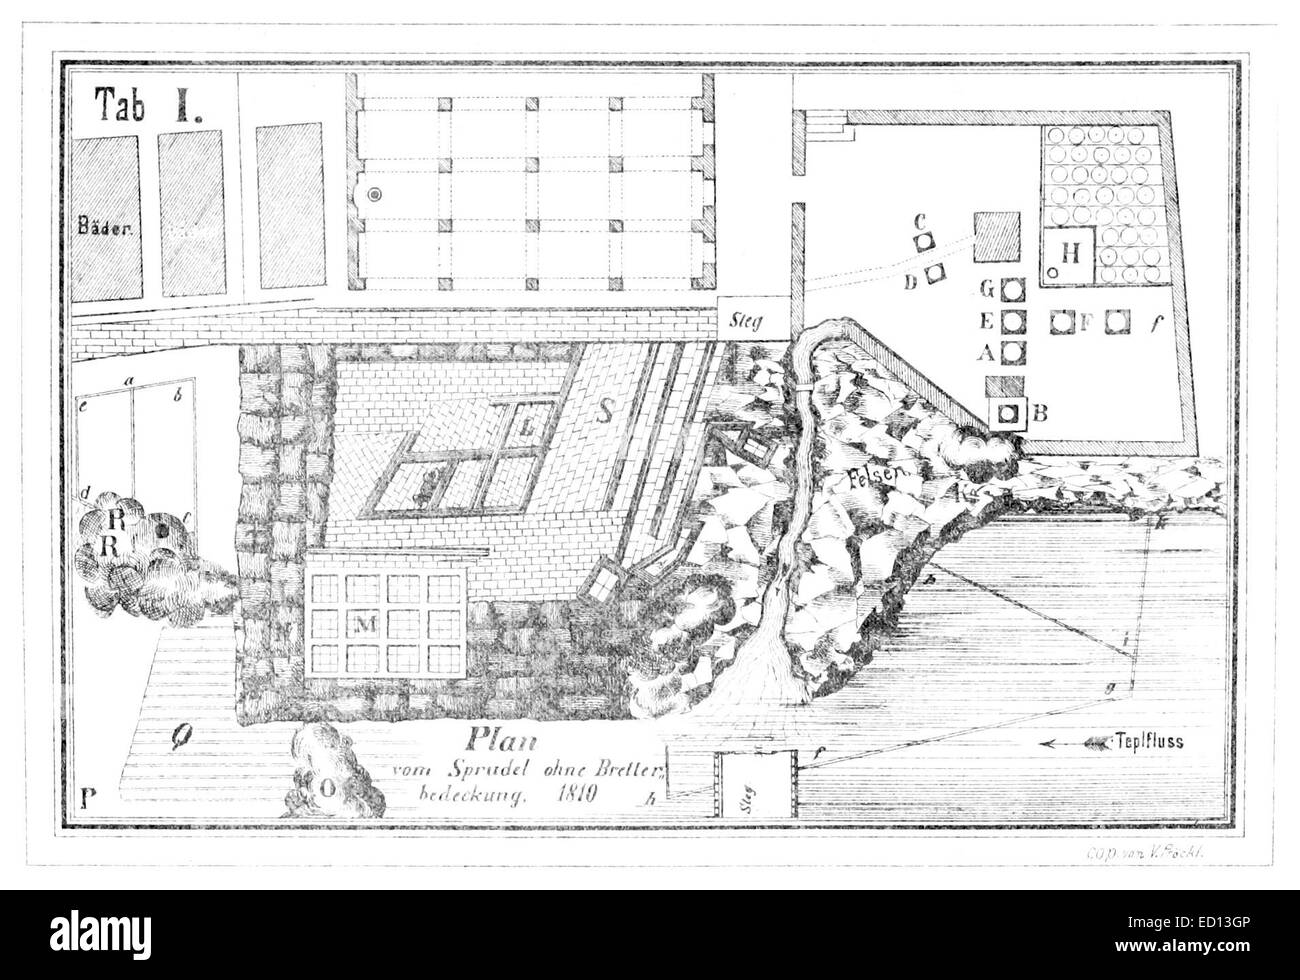 KB1883 pg185 Plan vom Sprudel ohne Bretterbedeckung 1810, opt Stock Photo